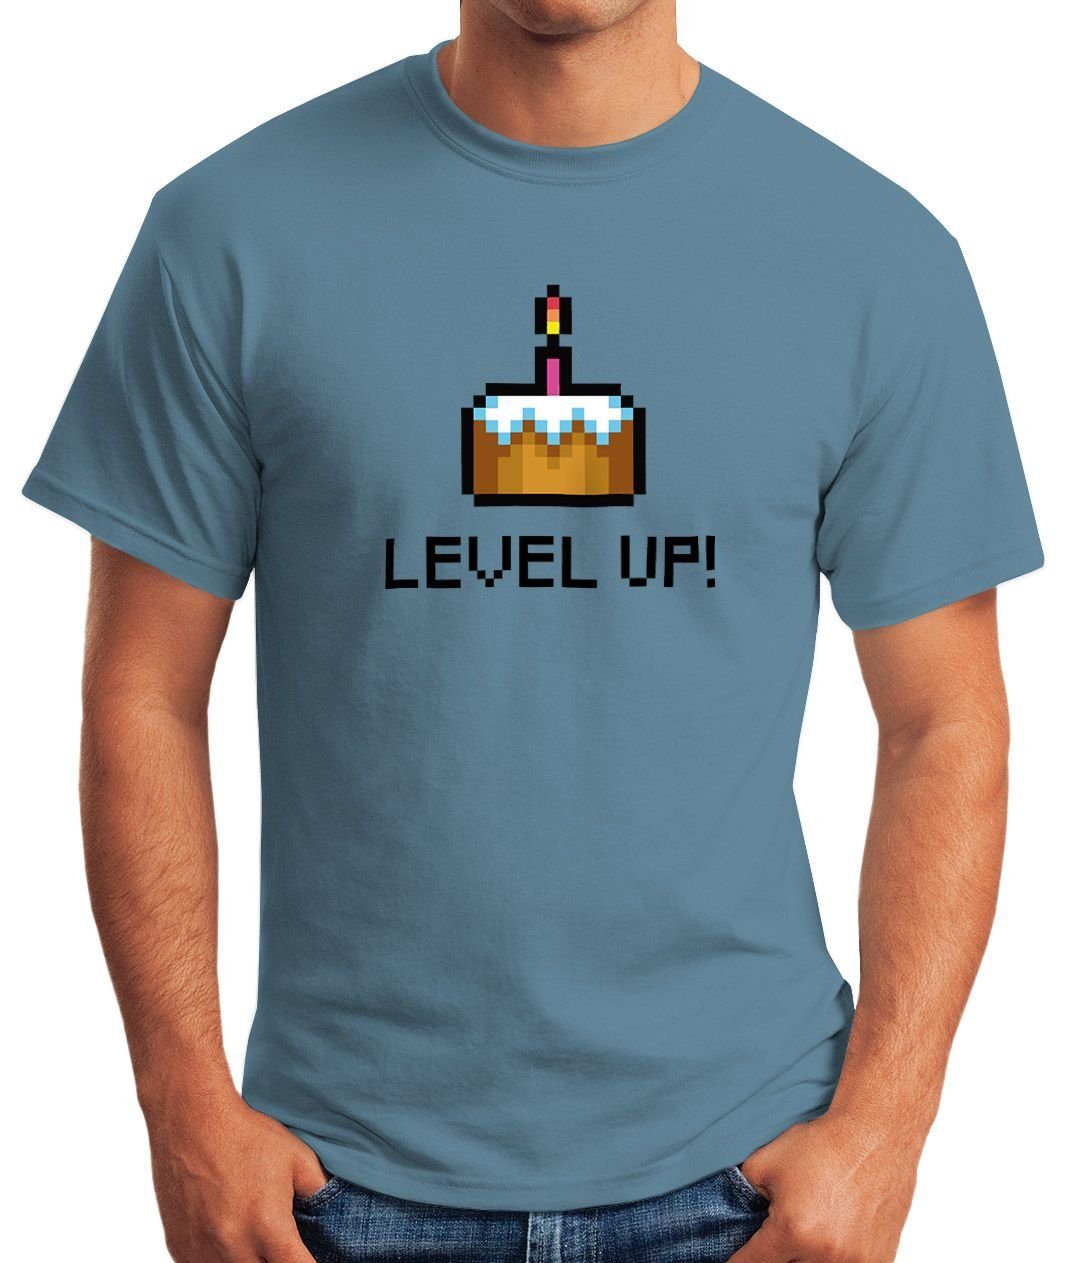 Pixel-Torte Moonworks® T-Shirt Fun-Shirt Arcade Level blau Gamer Retro Up Herren Pixelgrafik MoonWorks Print-Shirt mit Geburtstag Geschenk Print